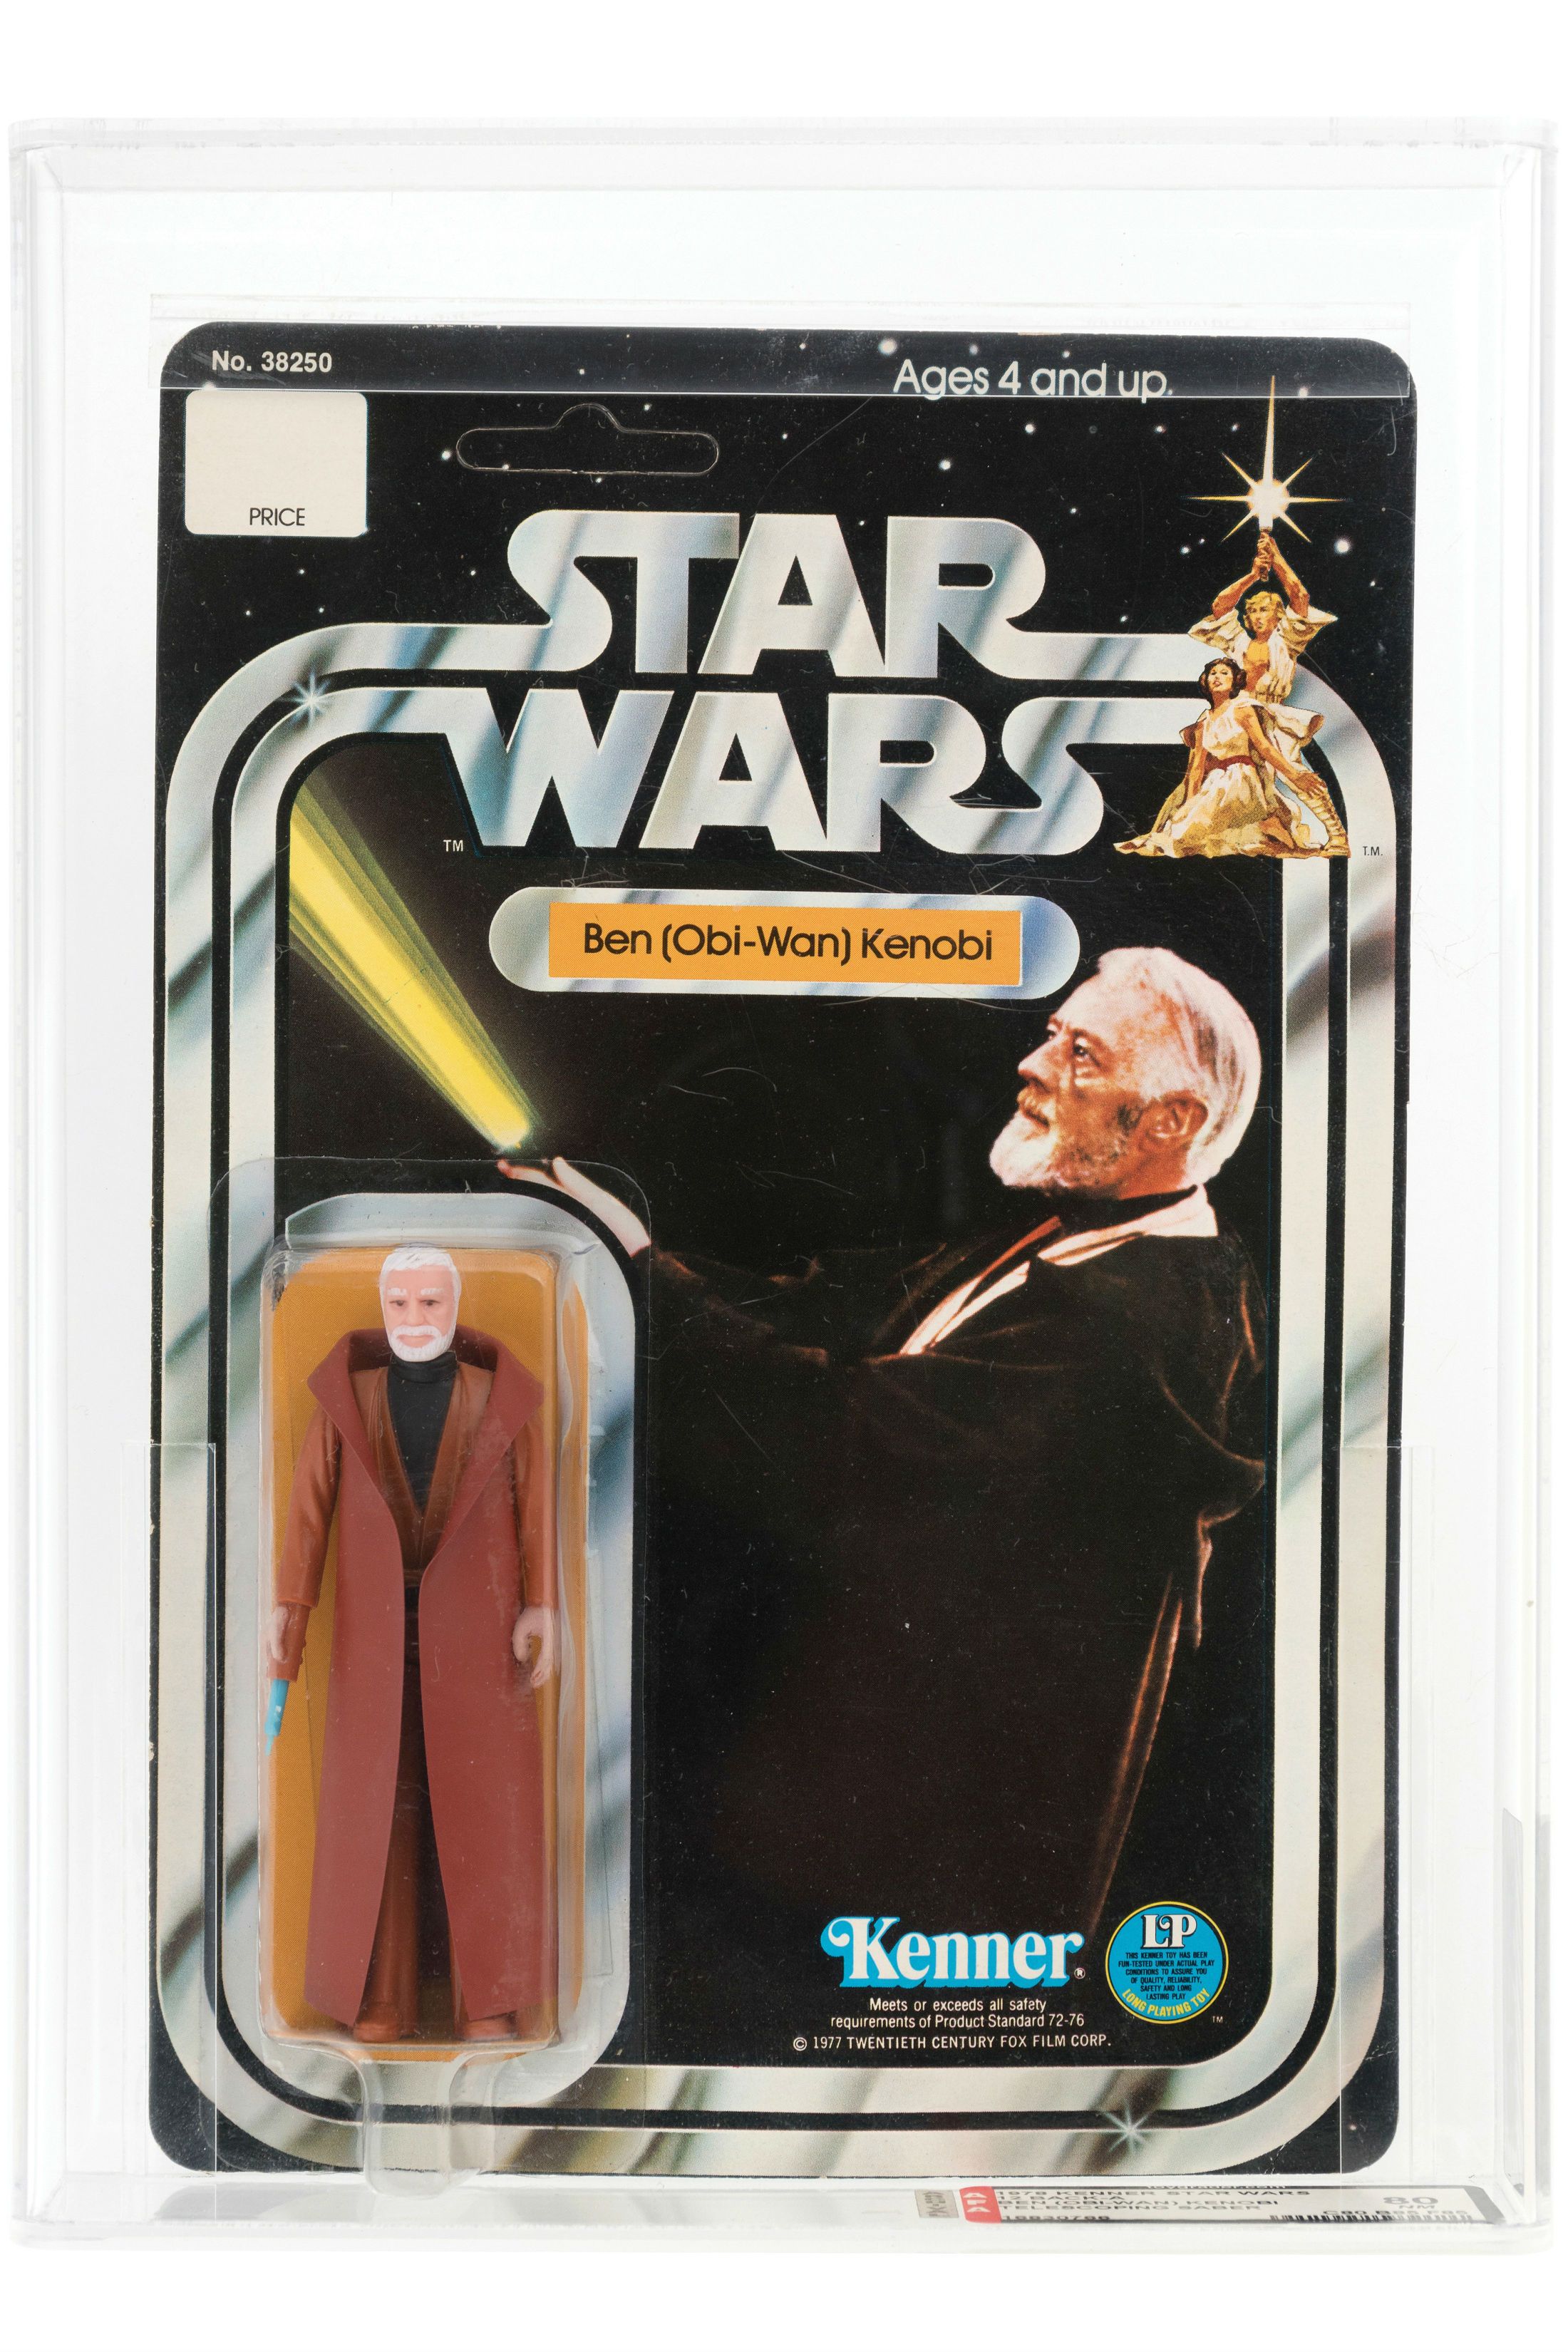 star wars toy sets